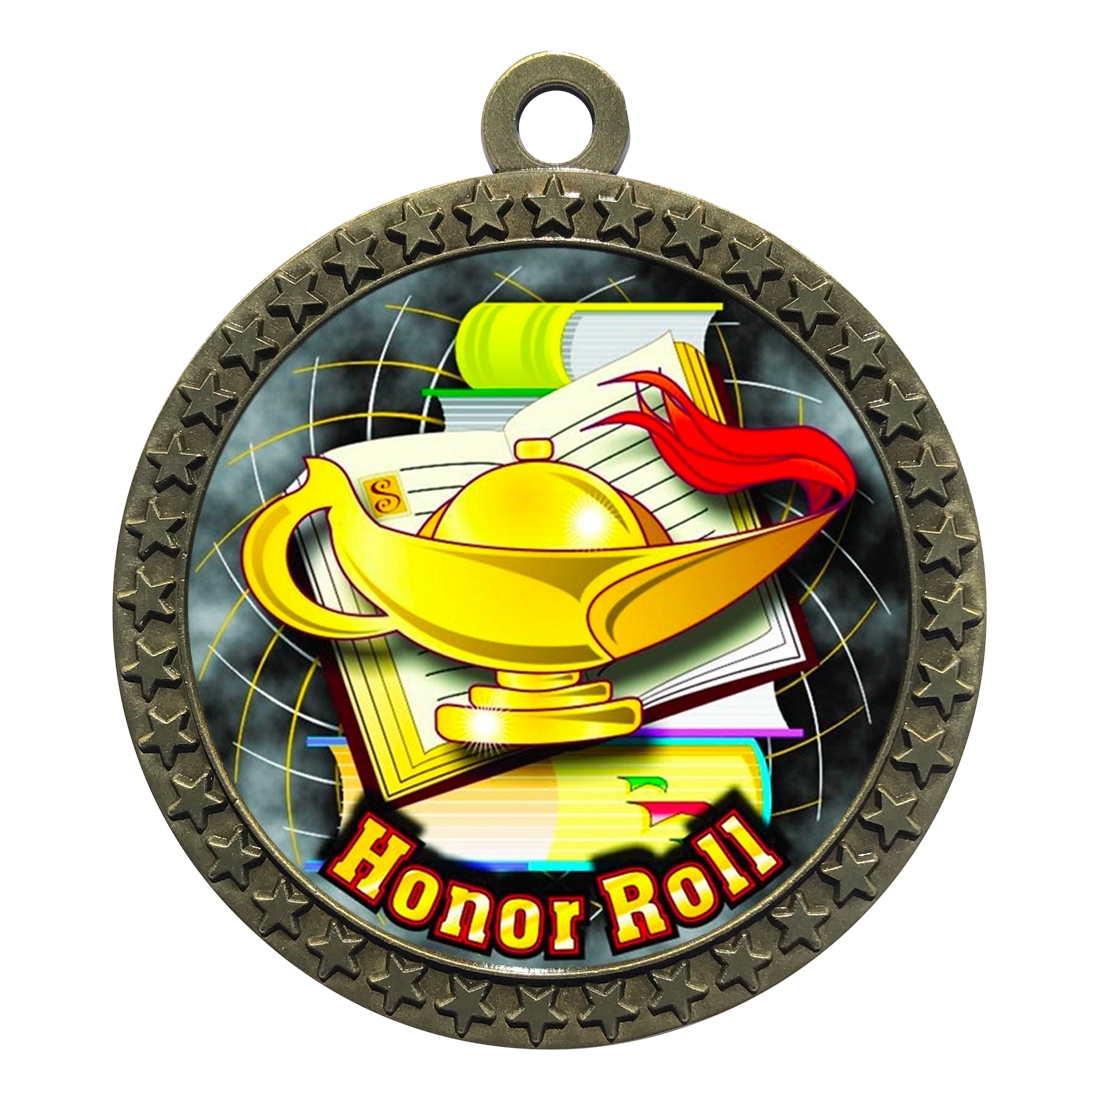 2-1/2" Honor Roll Medal